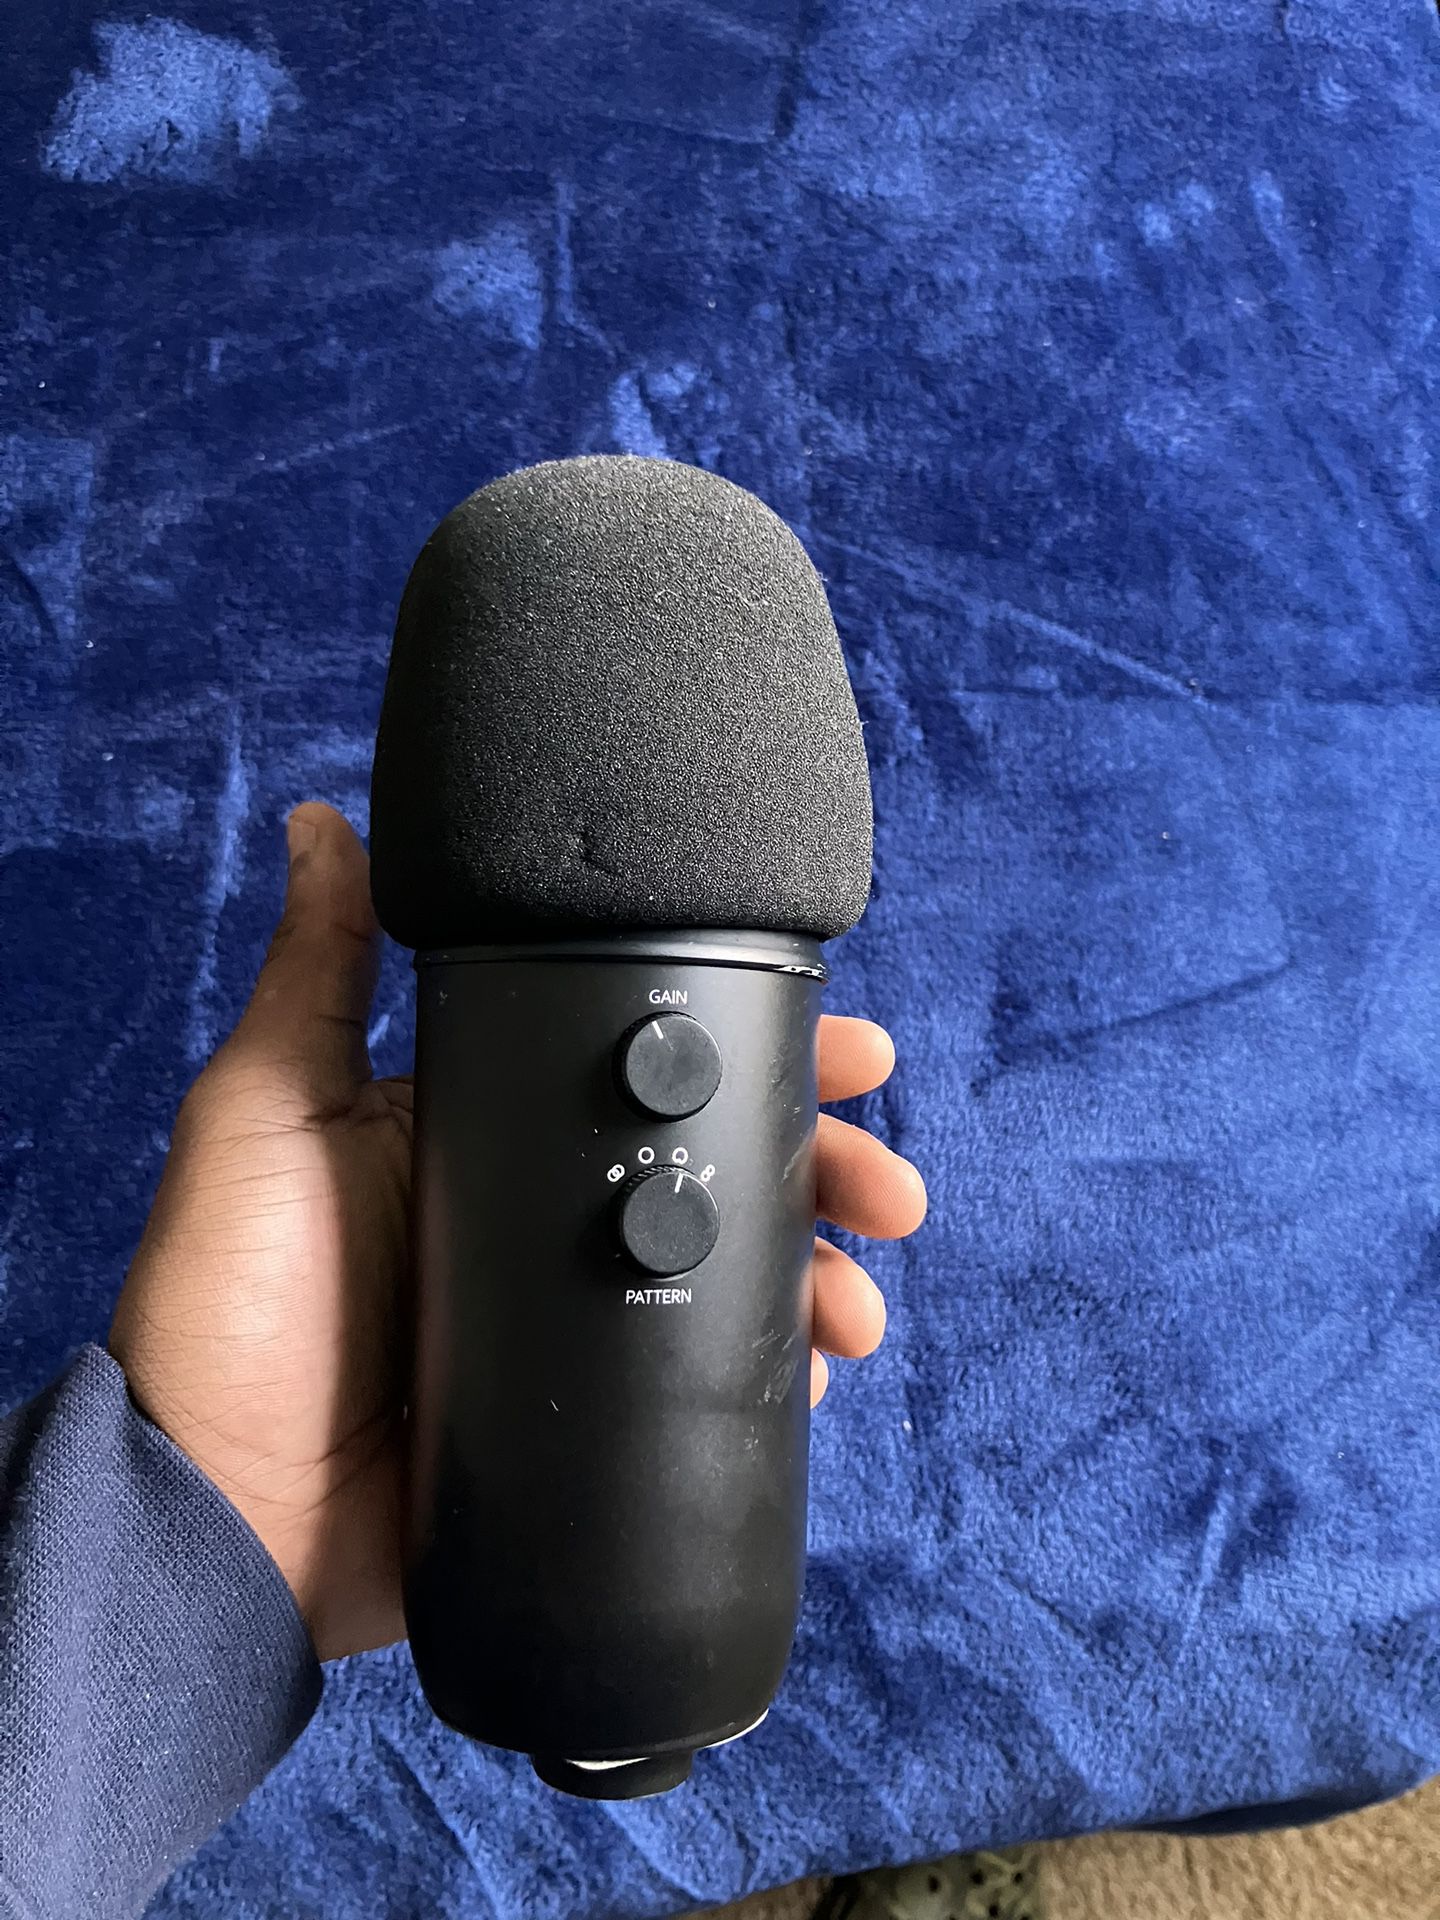 Yeti Microphone